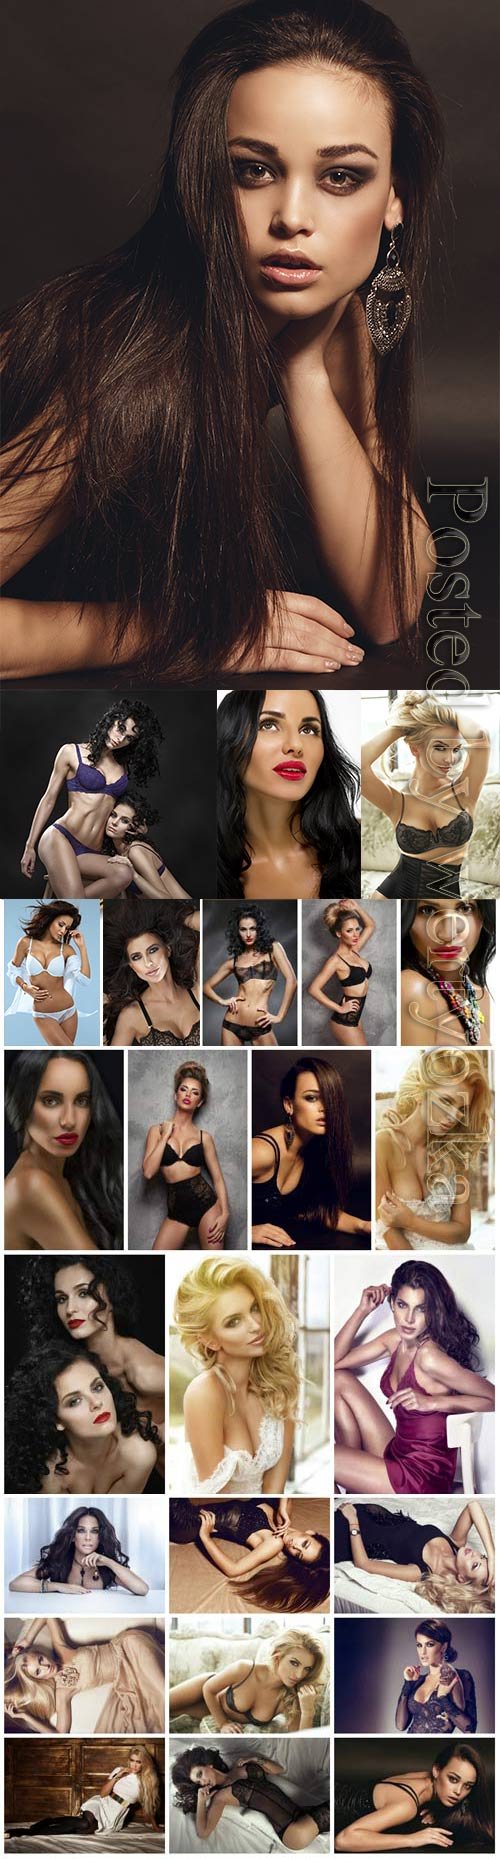 StockPhoto - Luxury Women In Lingerie Posing Vol 21